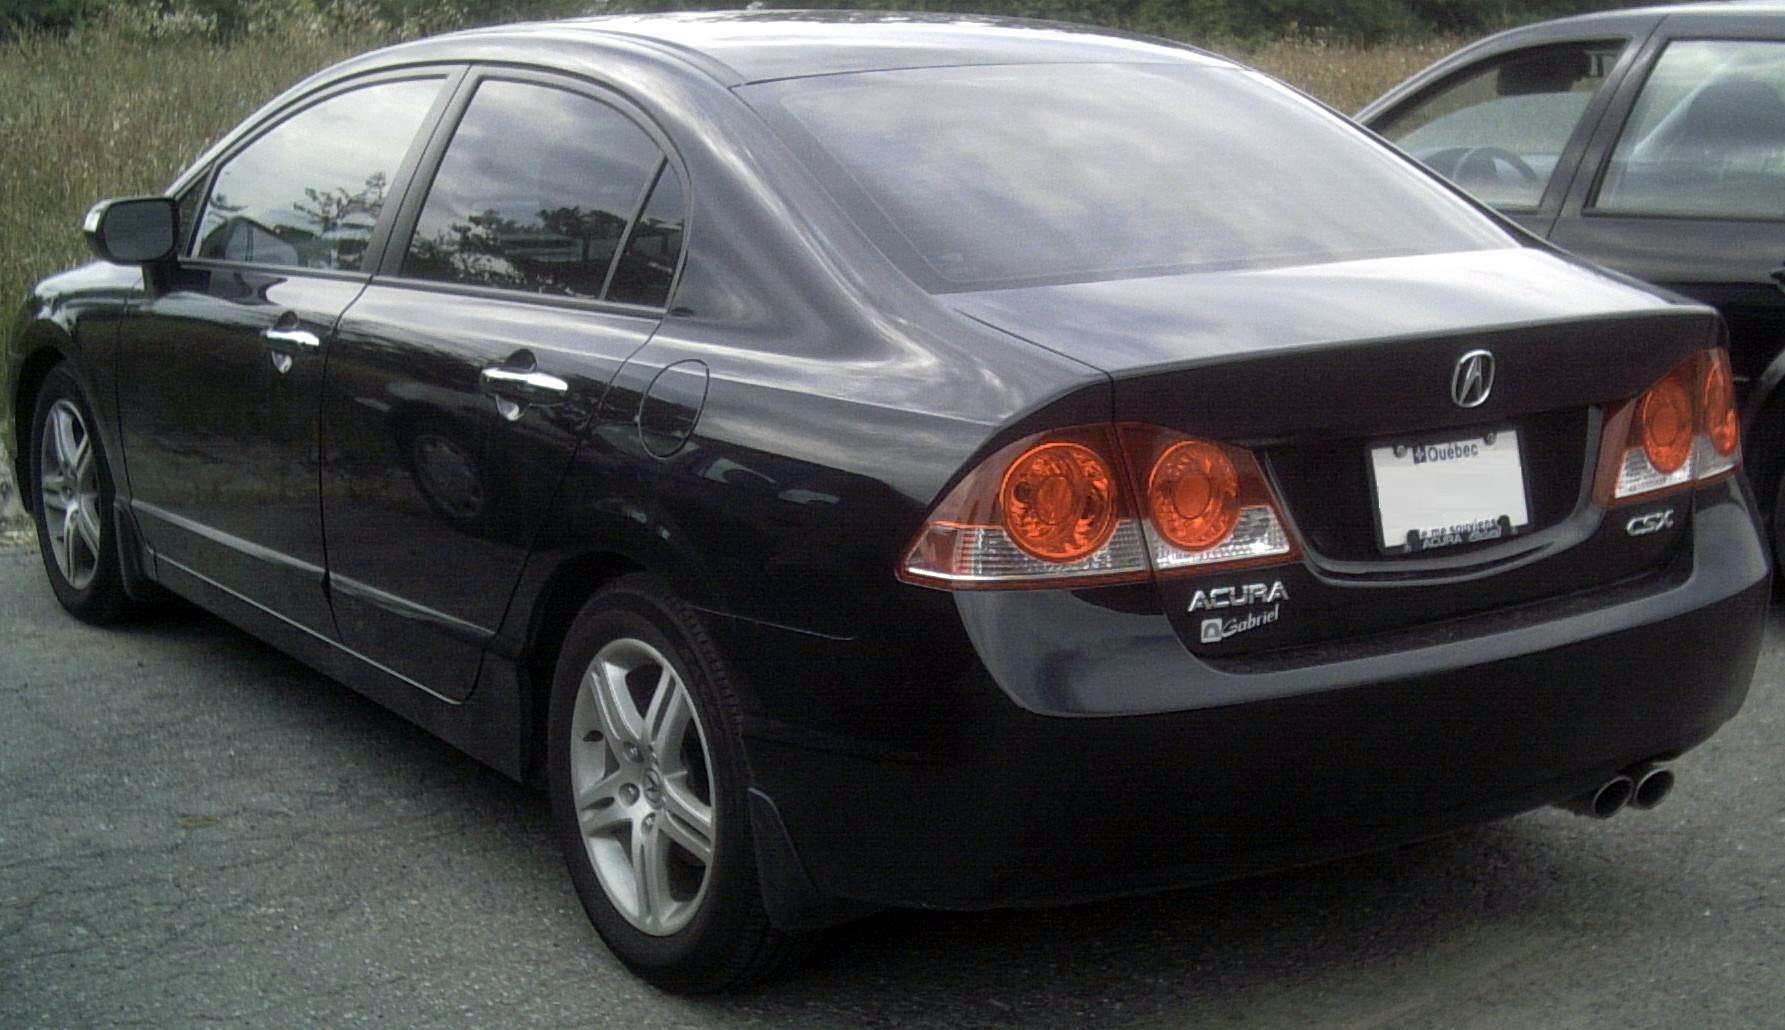 Acura CSX